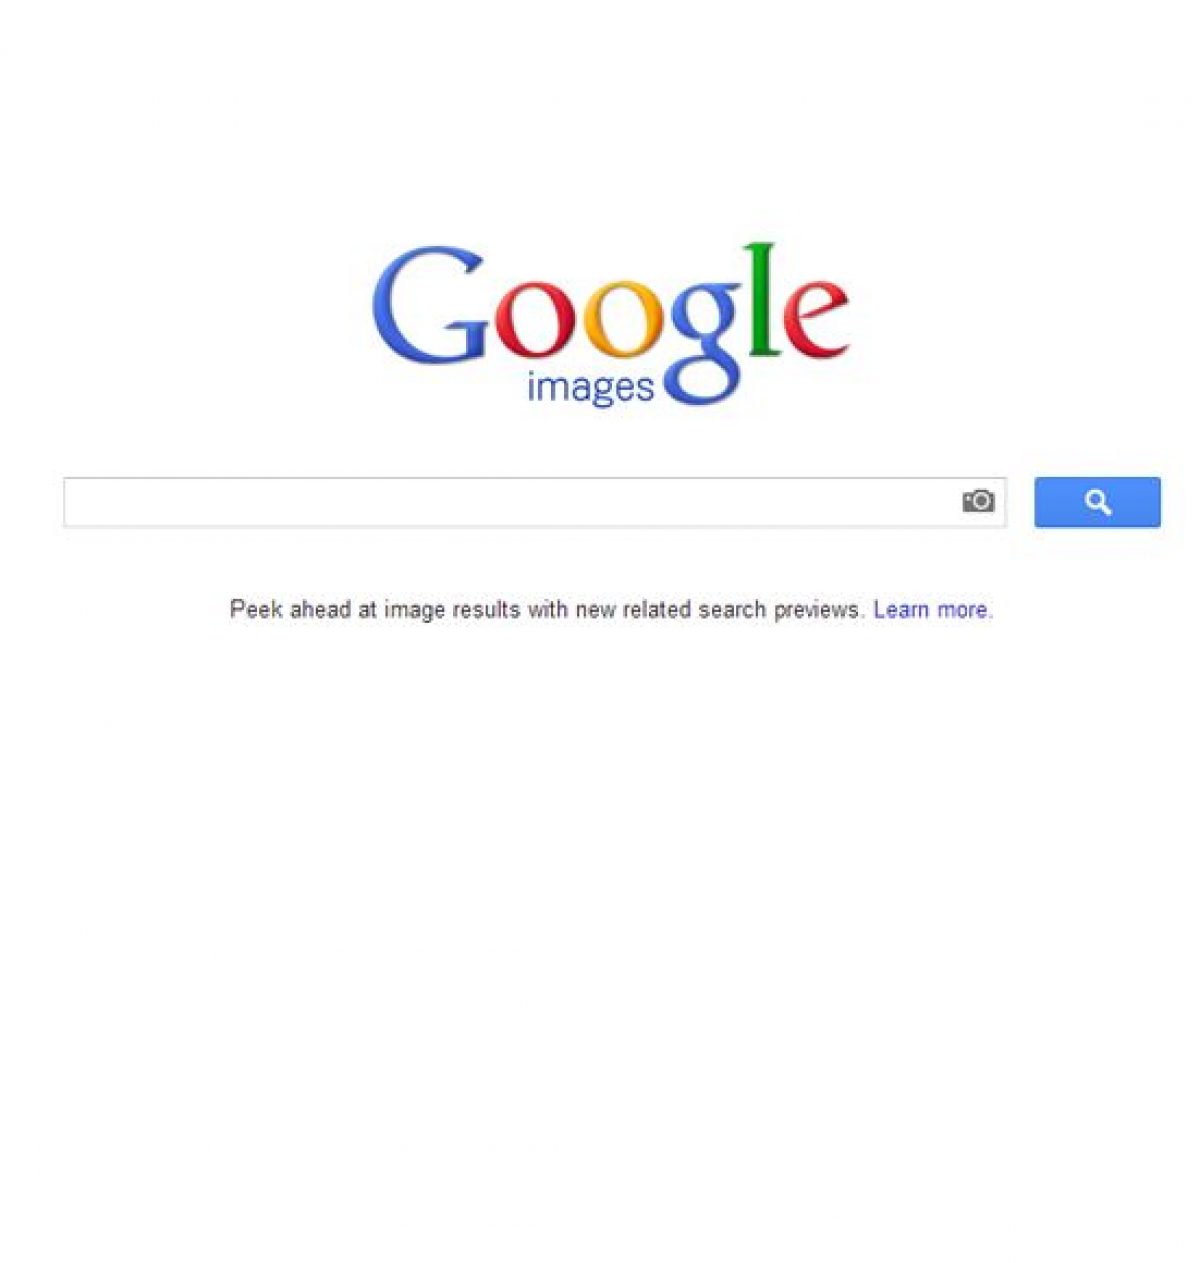 google reverse image search ios